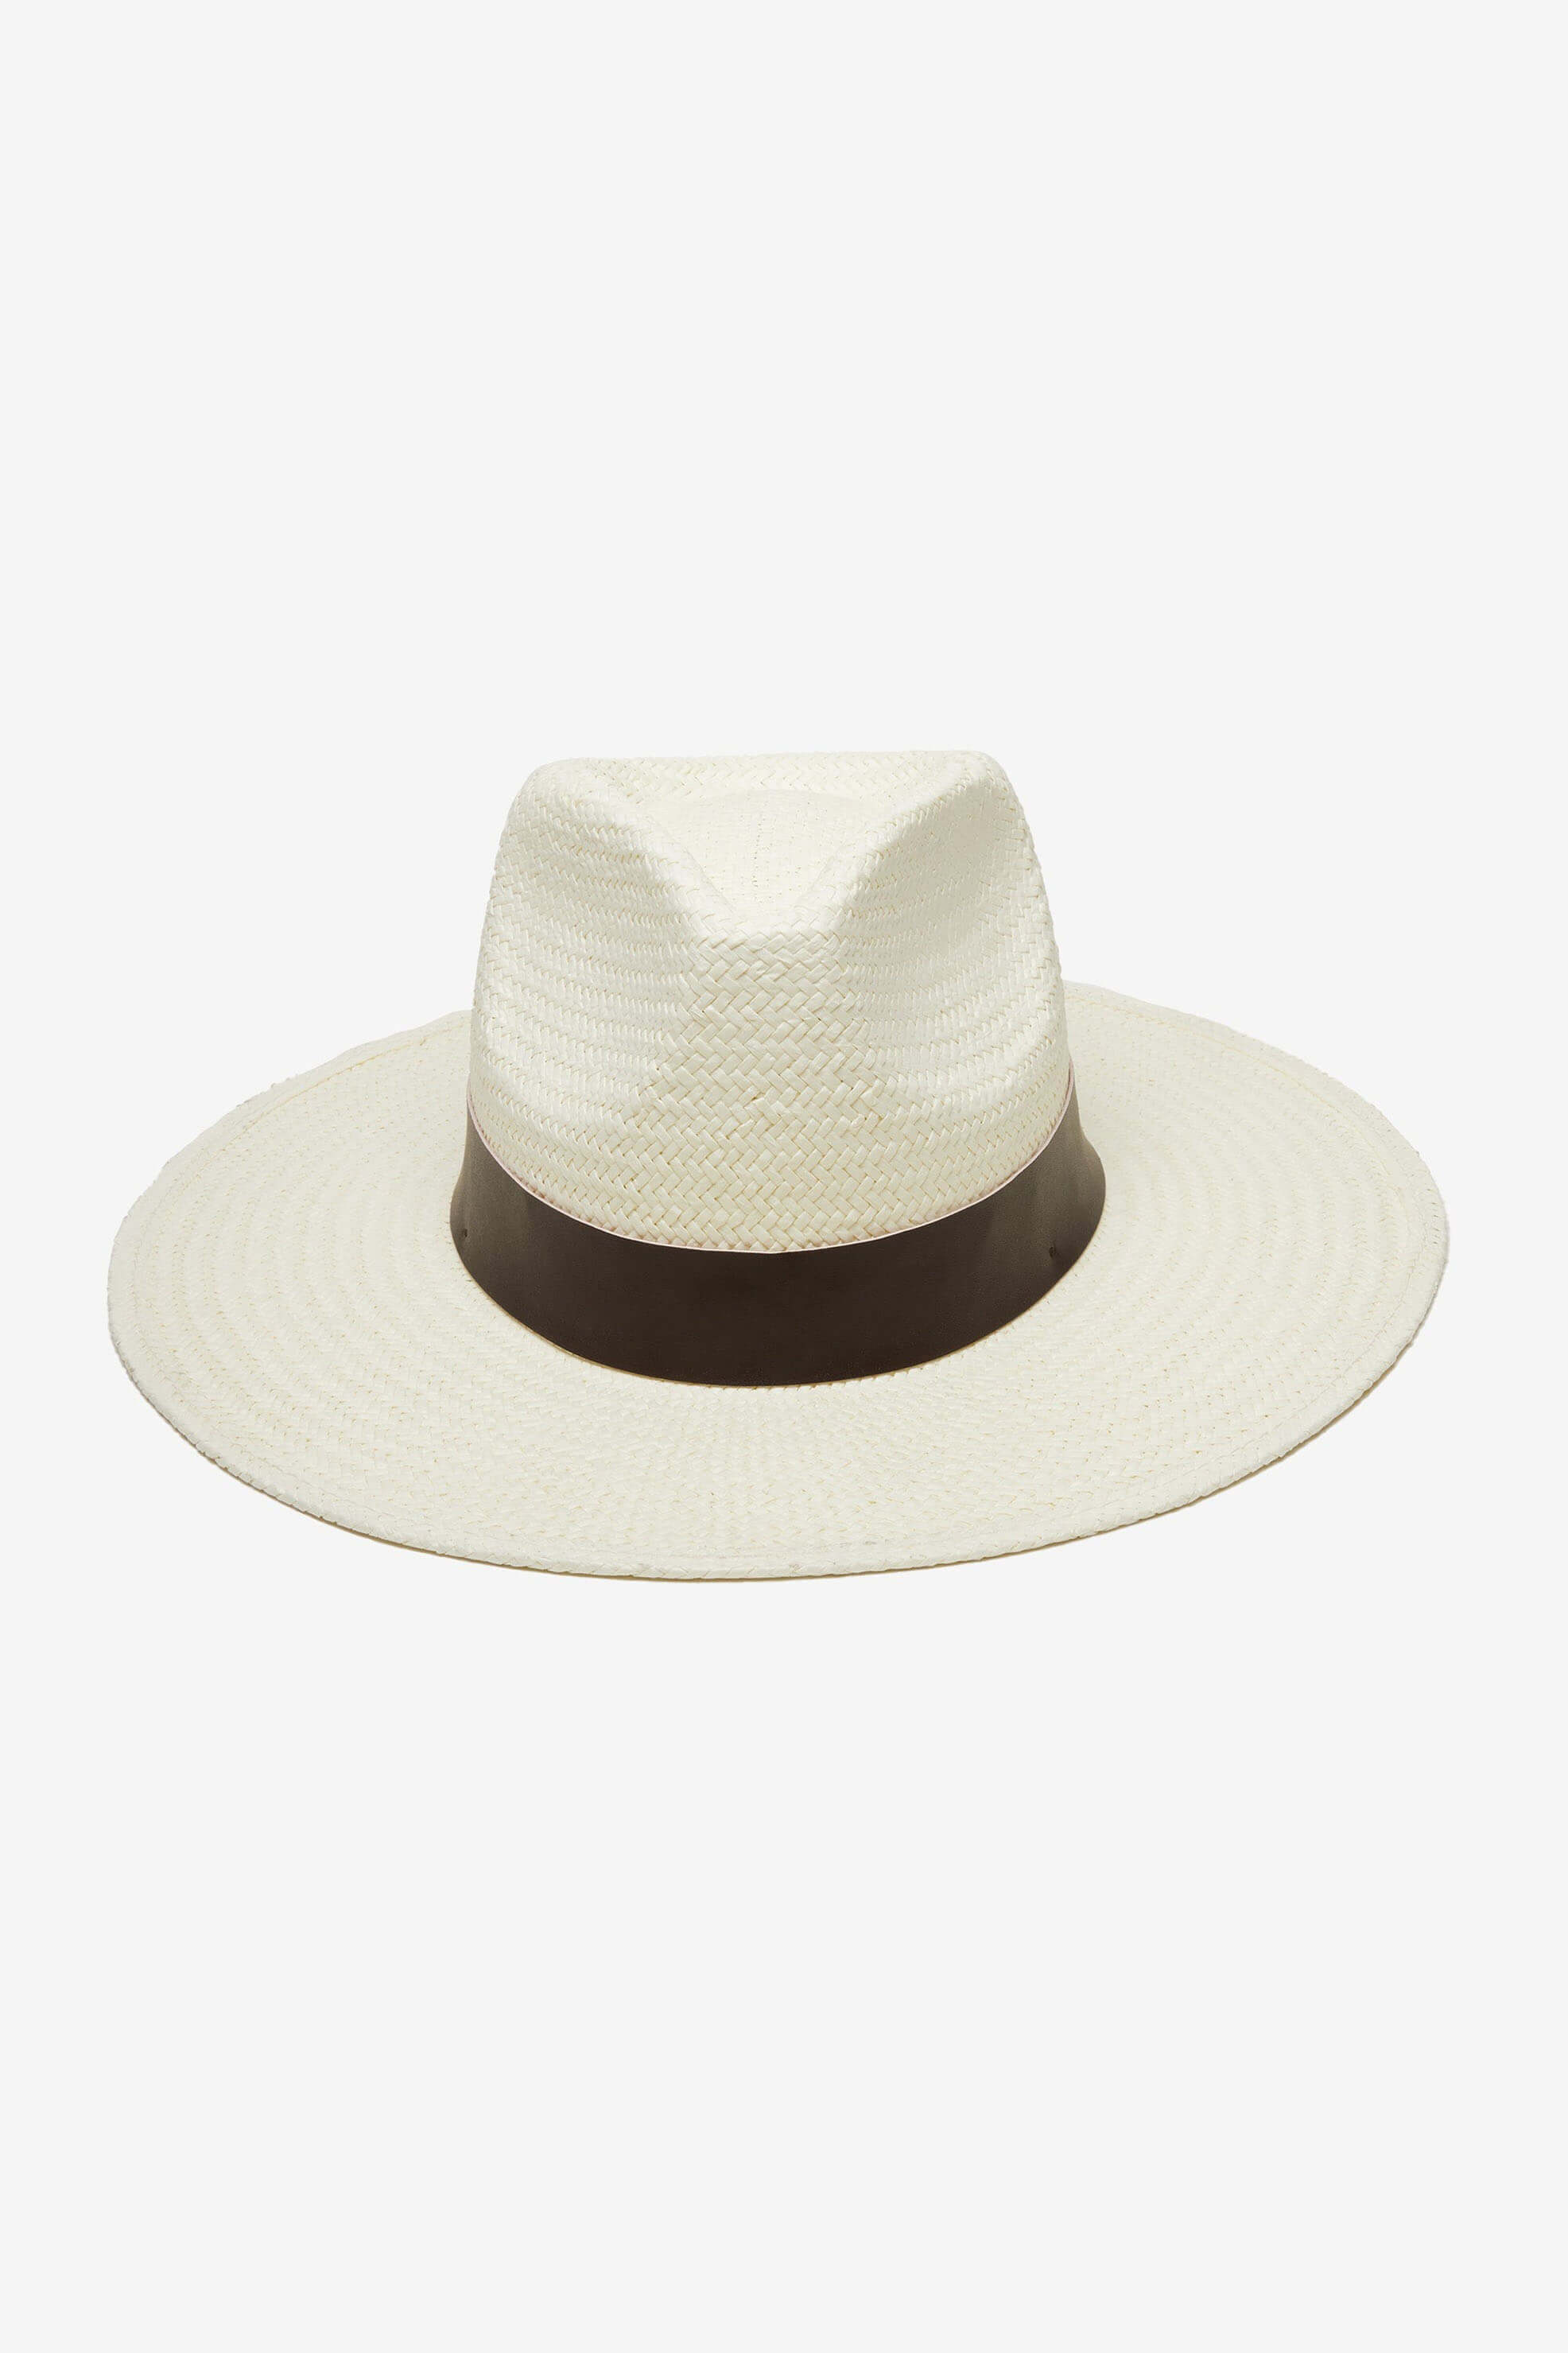 Wyeth slater hat in ivory